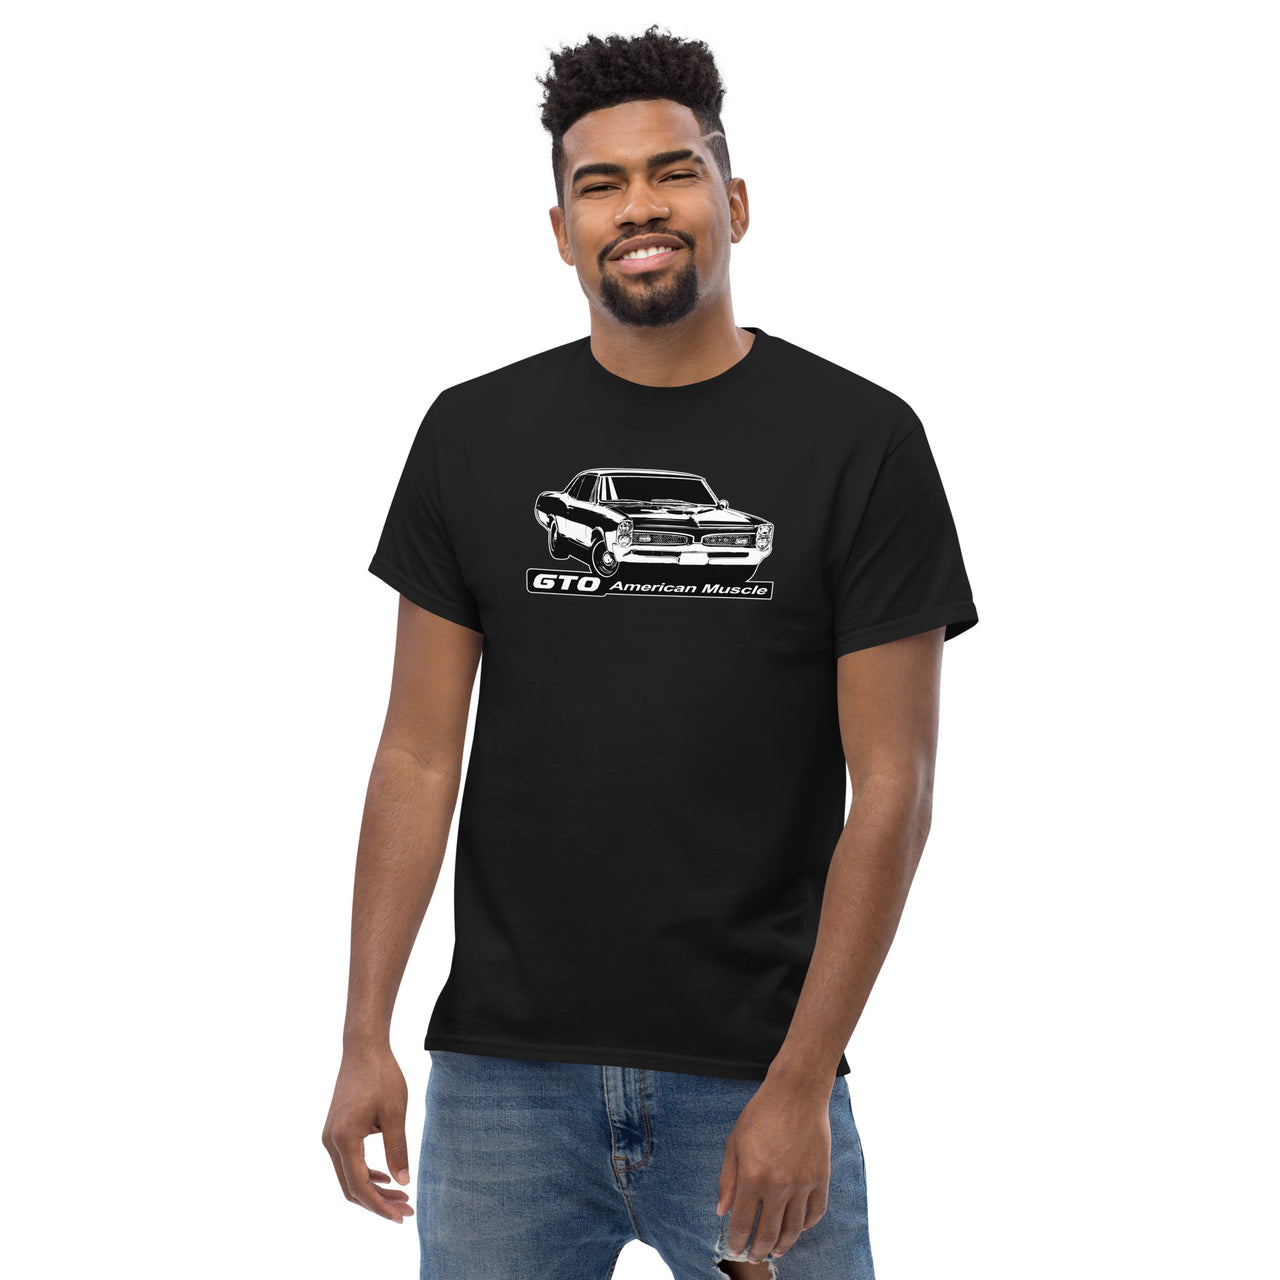 67 GTO T-Shirt